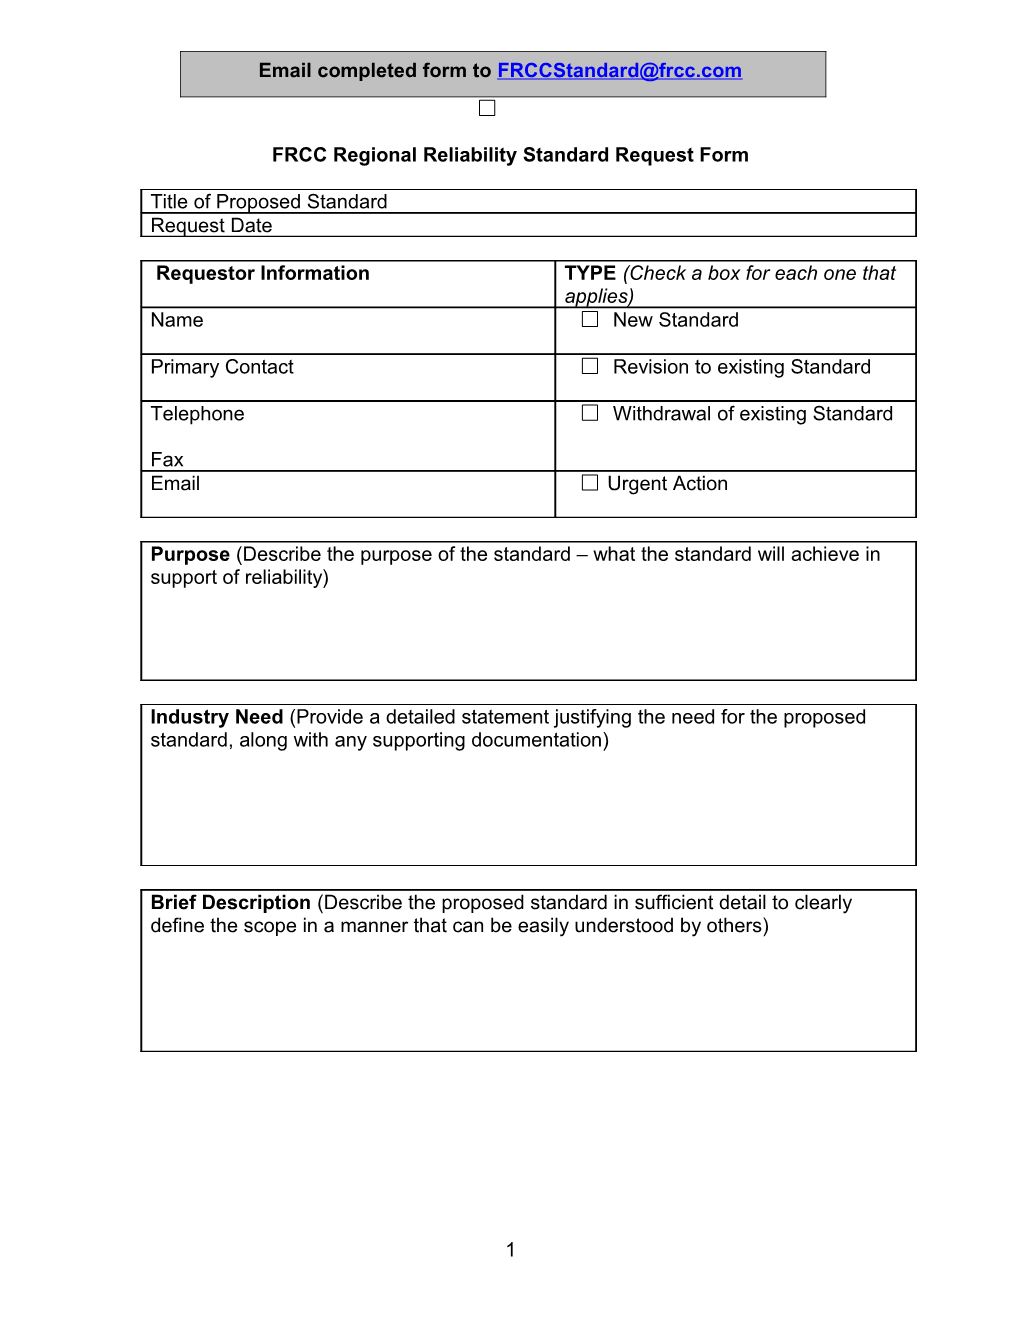 FRCC Regional Reliability Standard Request Form